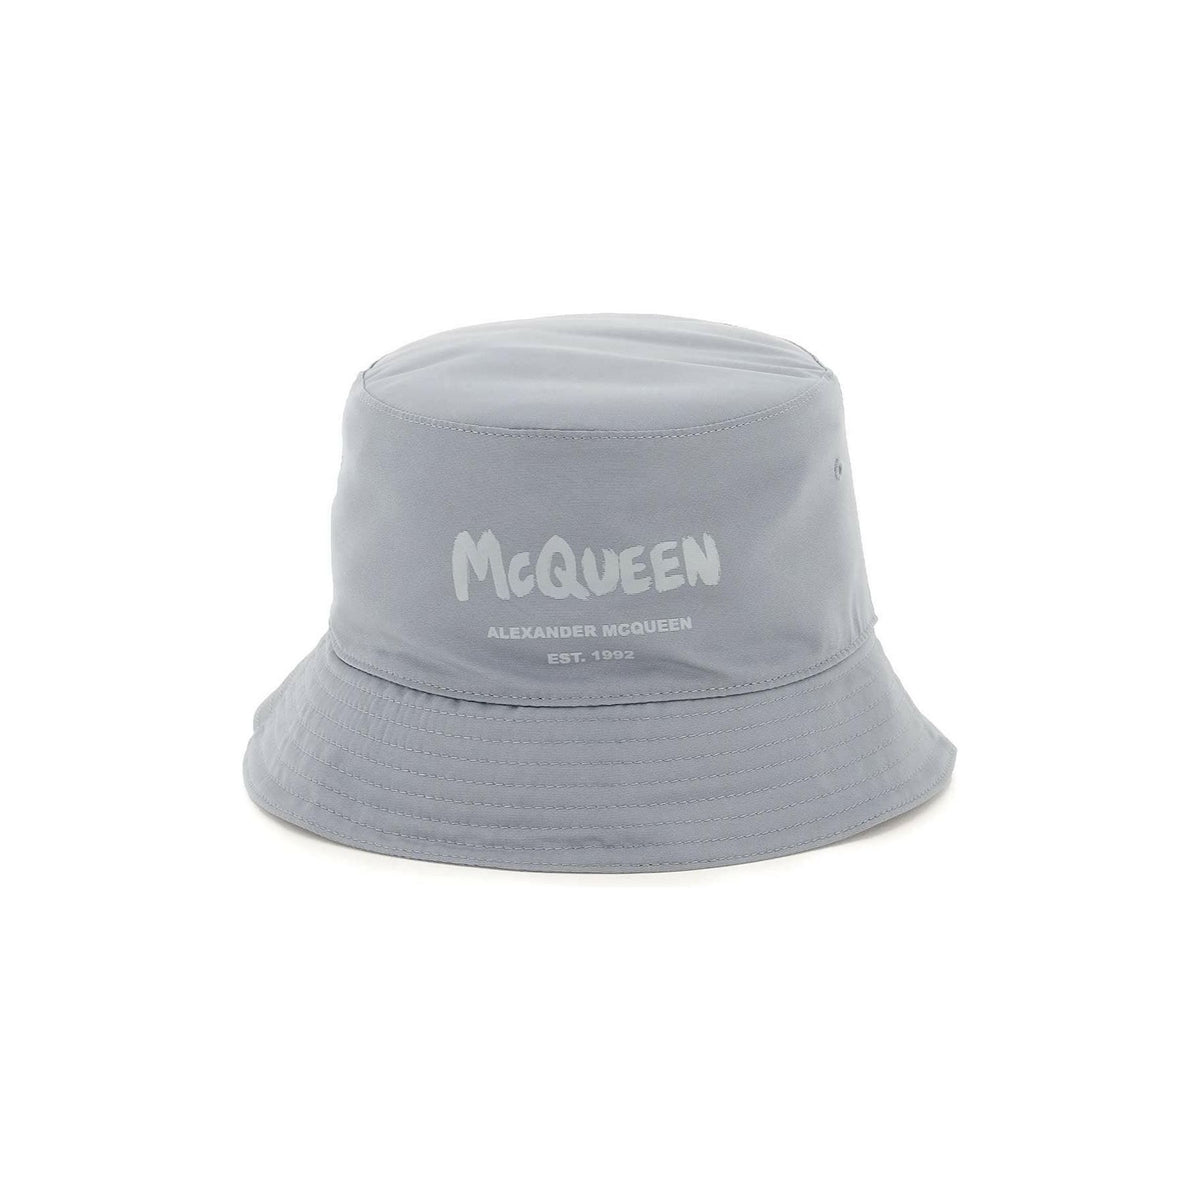 ALEXANDER MCQUEEN - McQueen Graffiti Bucket Hat - JOHN JULIA